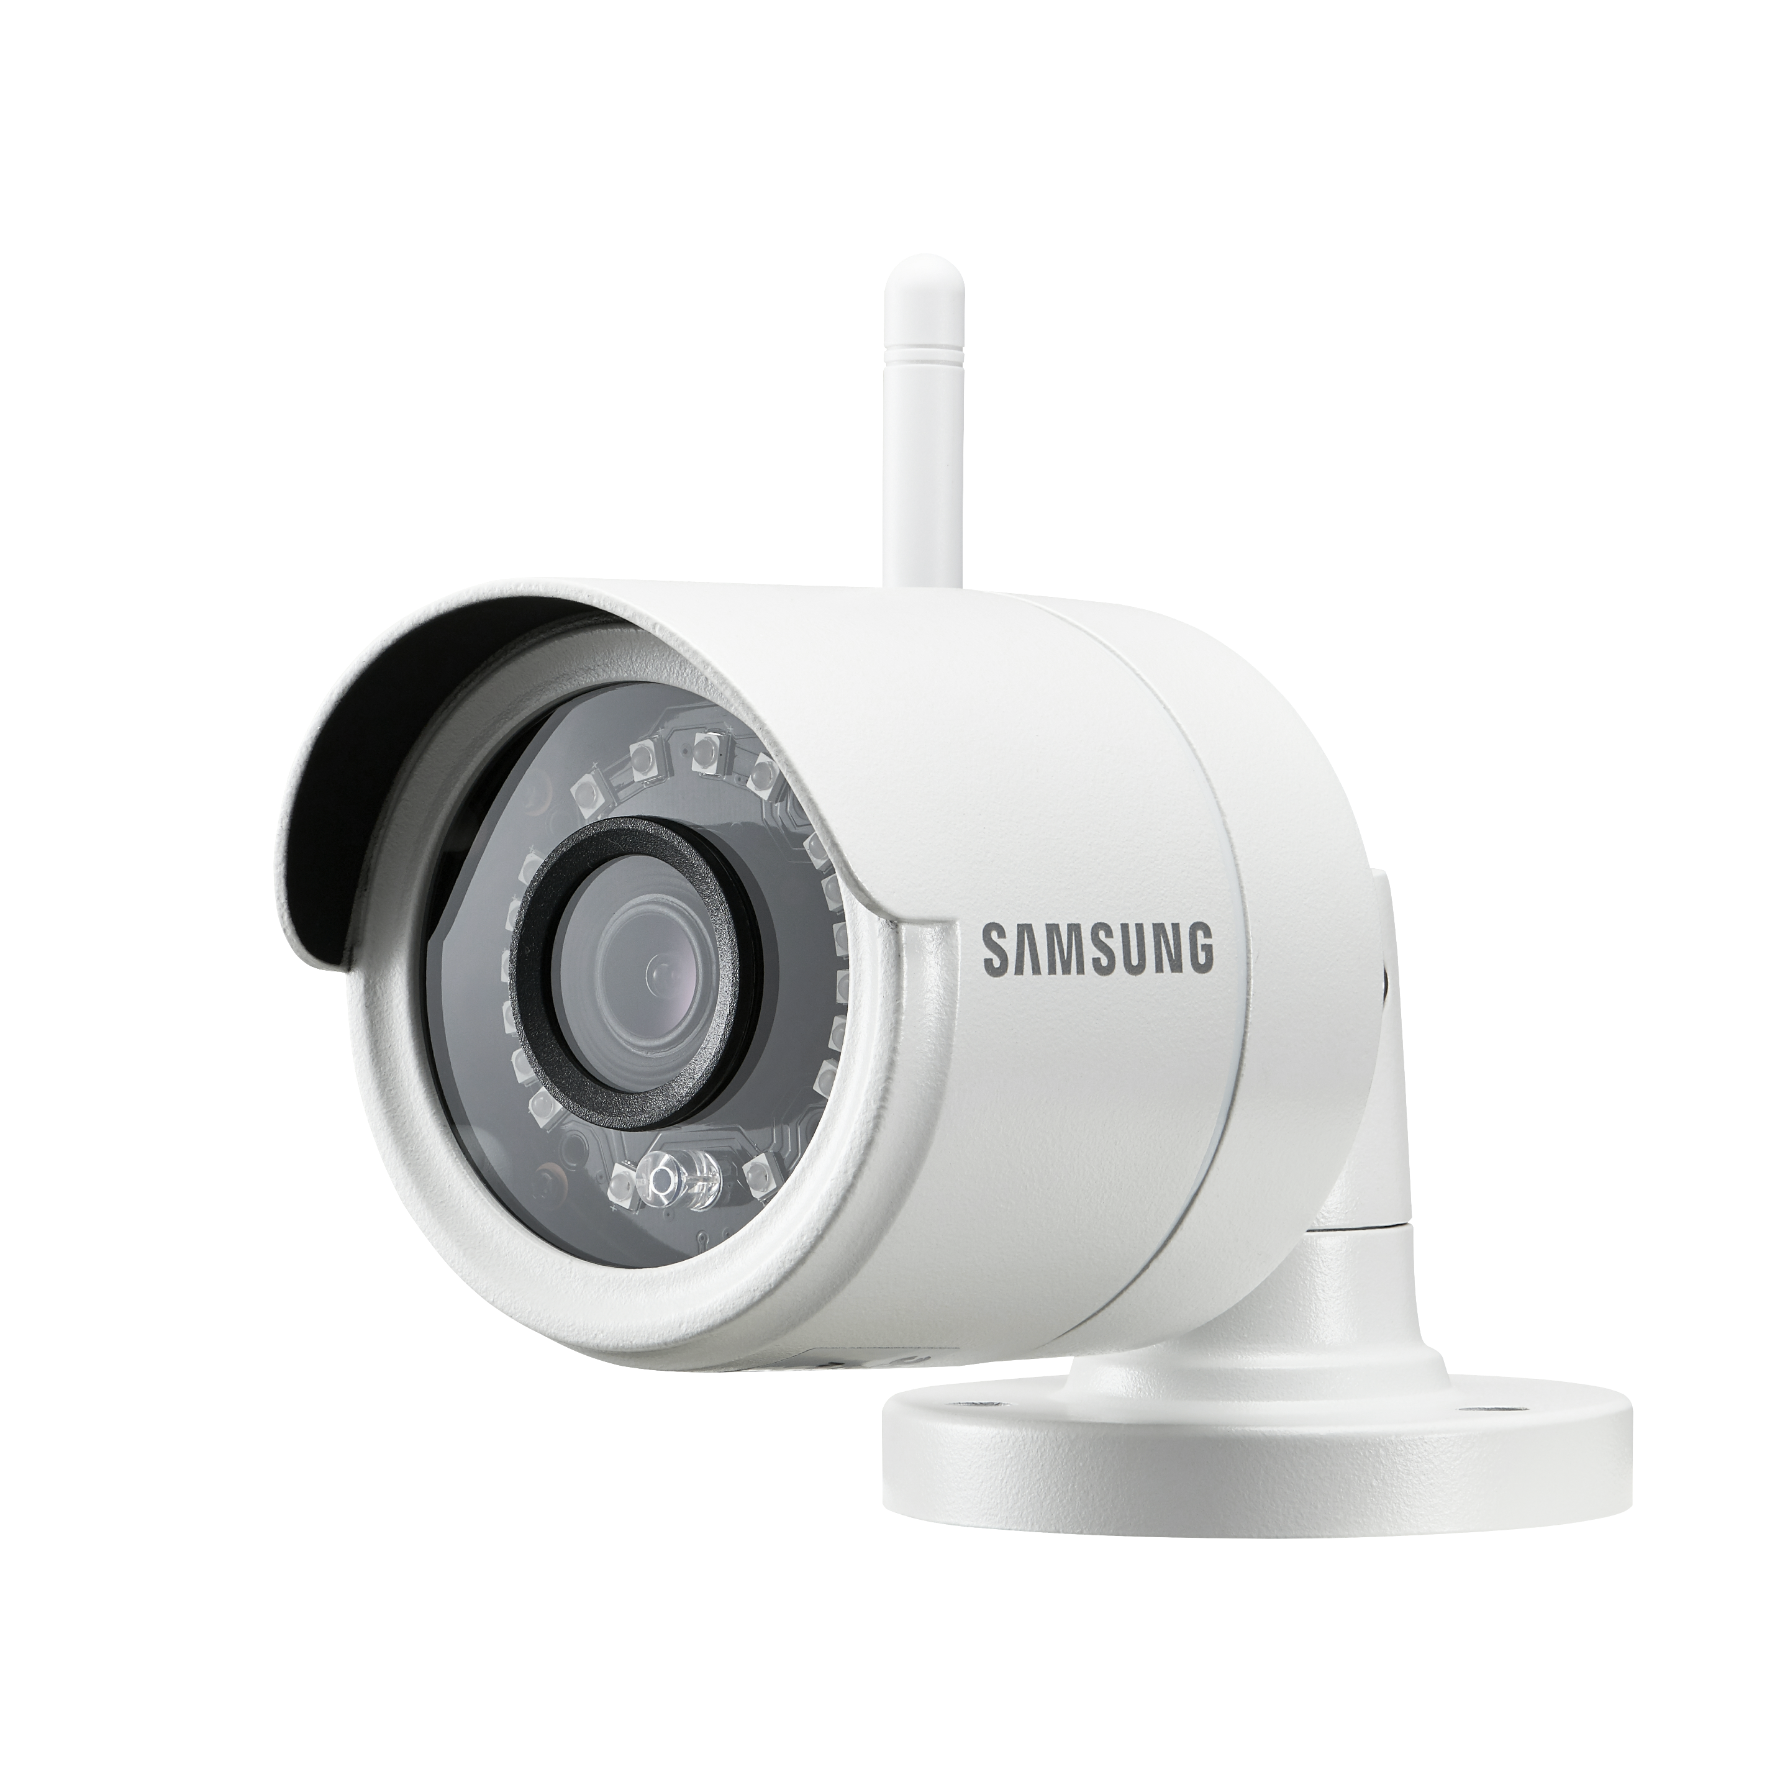 Samsung WISENET Camera. WISENET (Samsung) HCB-6000 оптика. Samsung SNC-l200p. Samsung WISENET SNF-7010p.